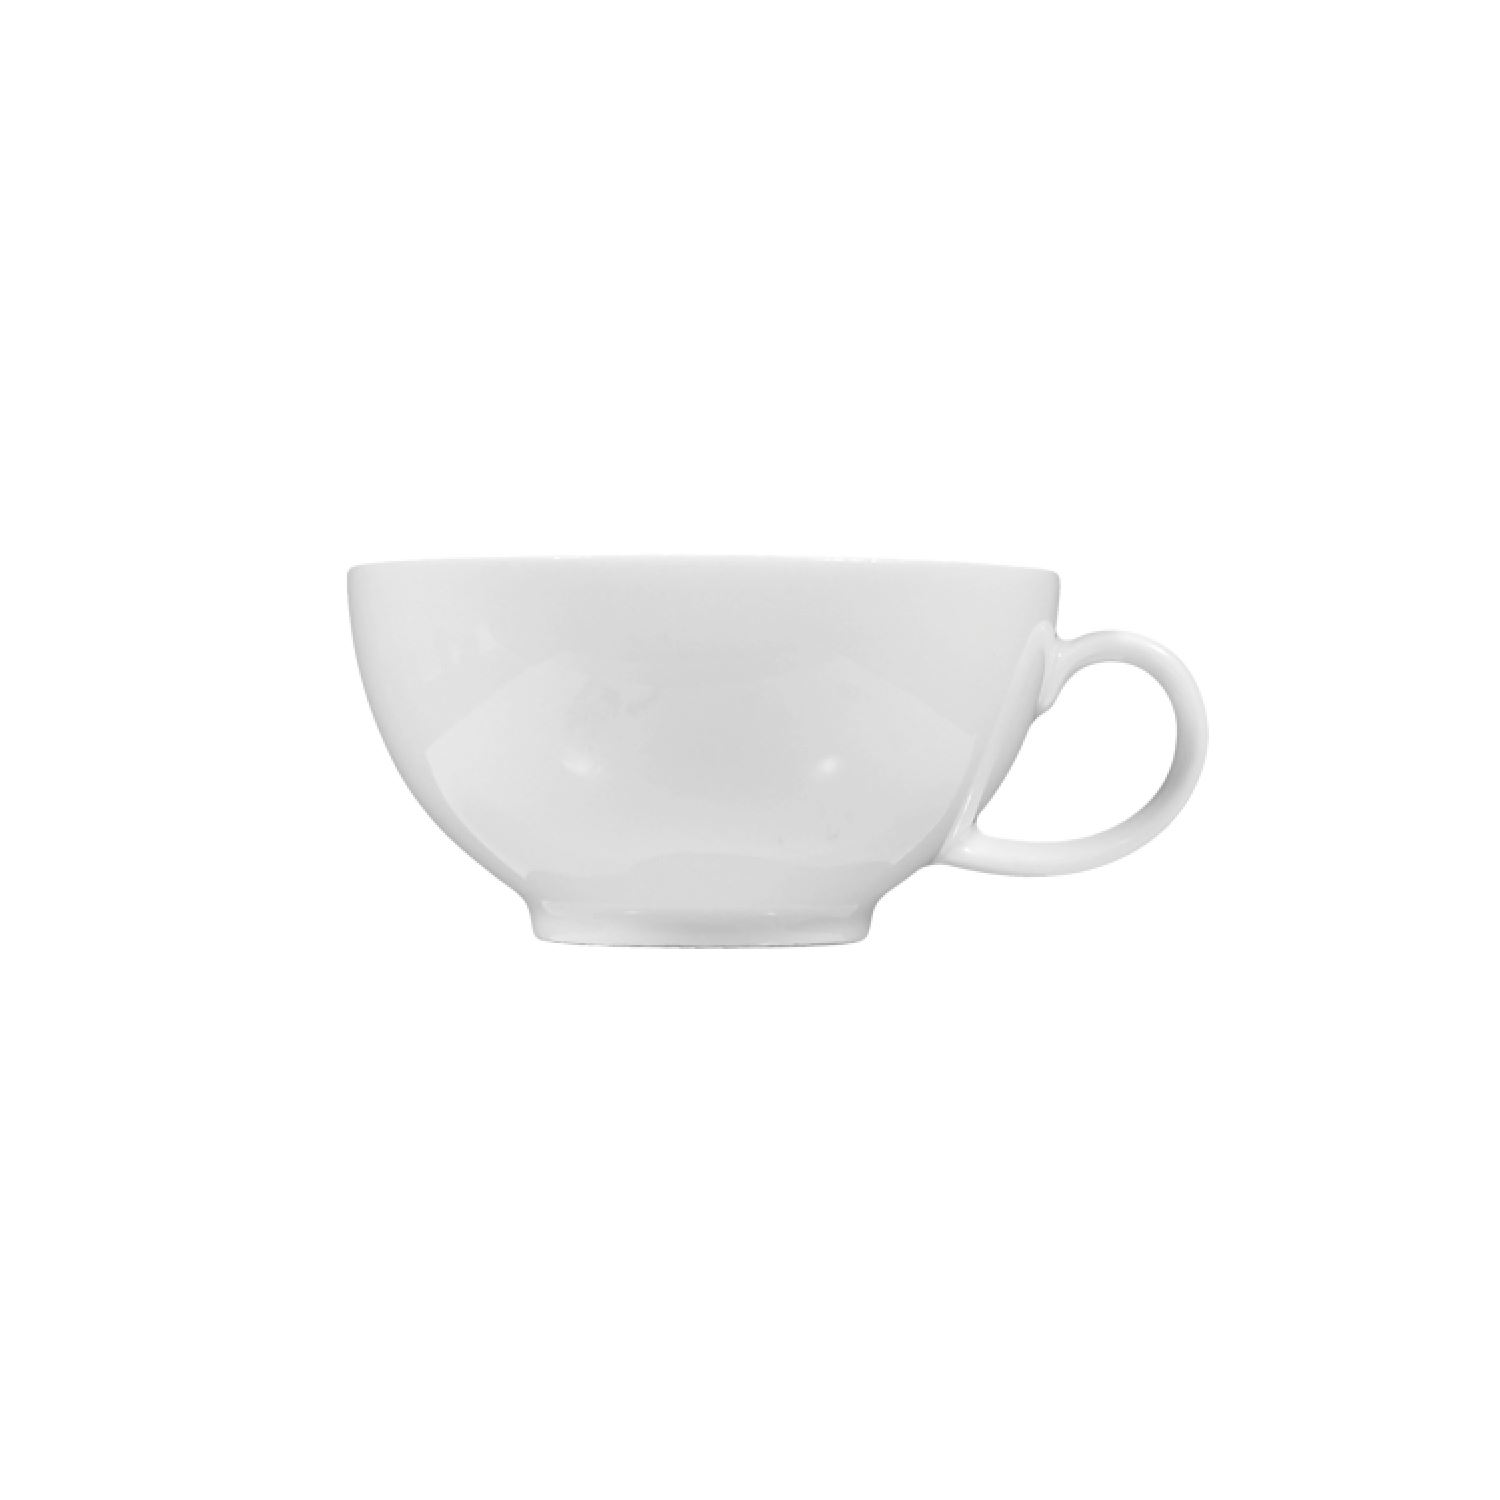 "Arco" Tea Cup